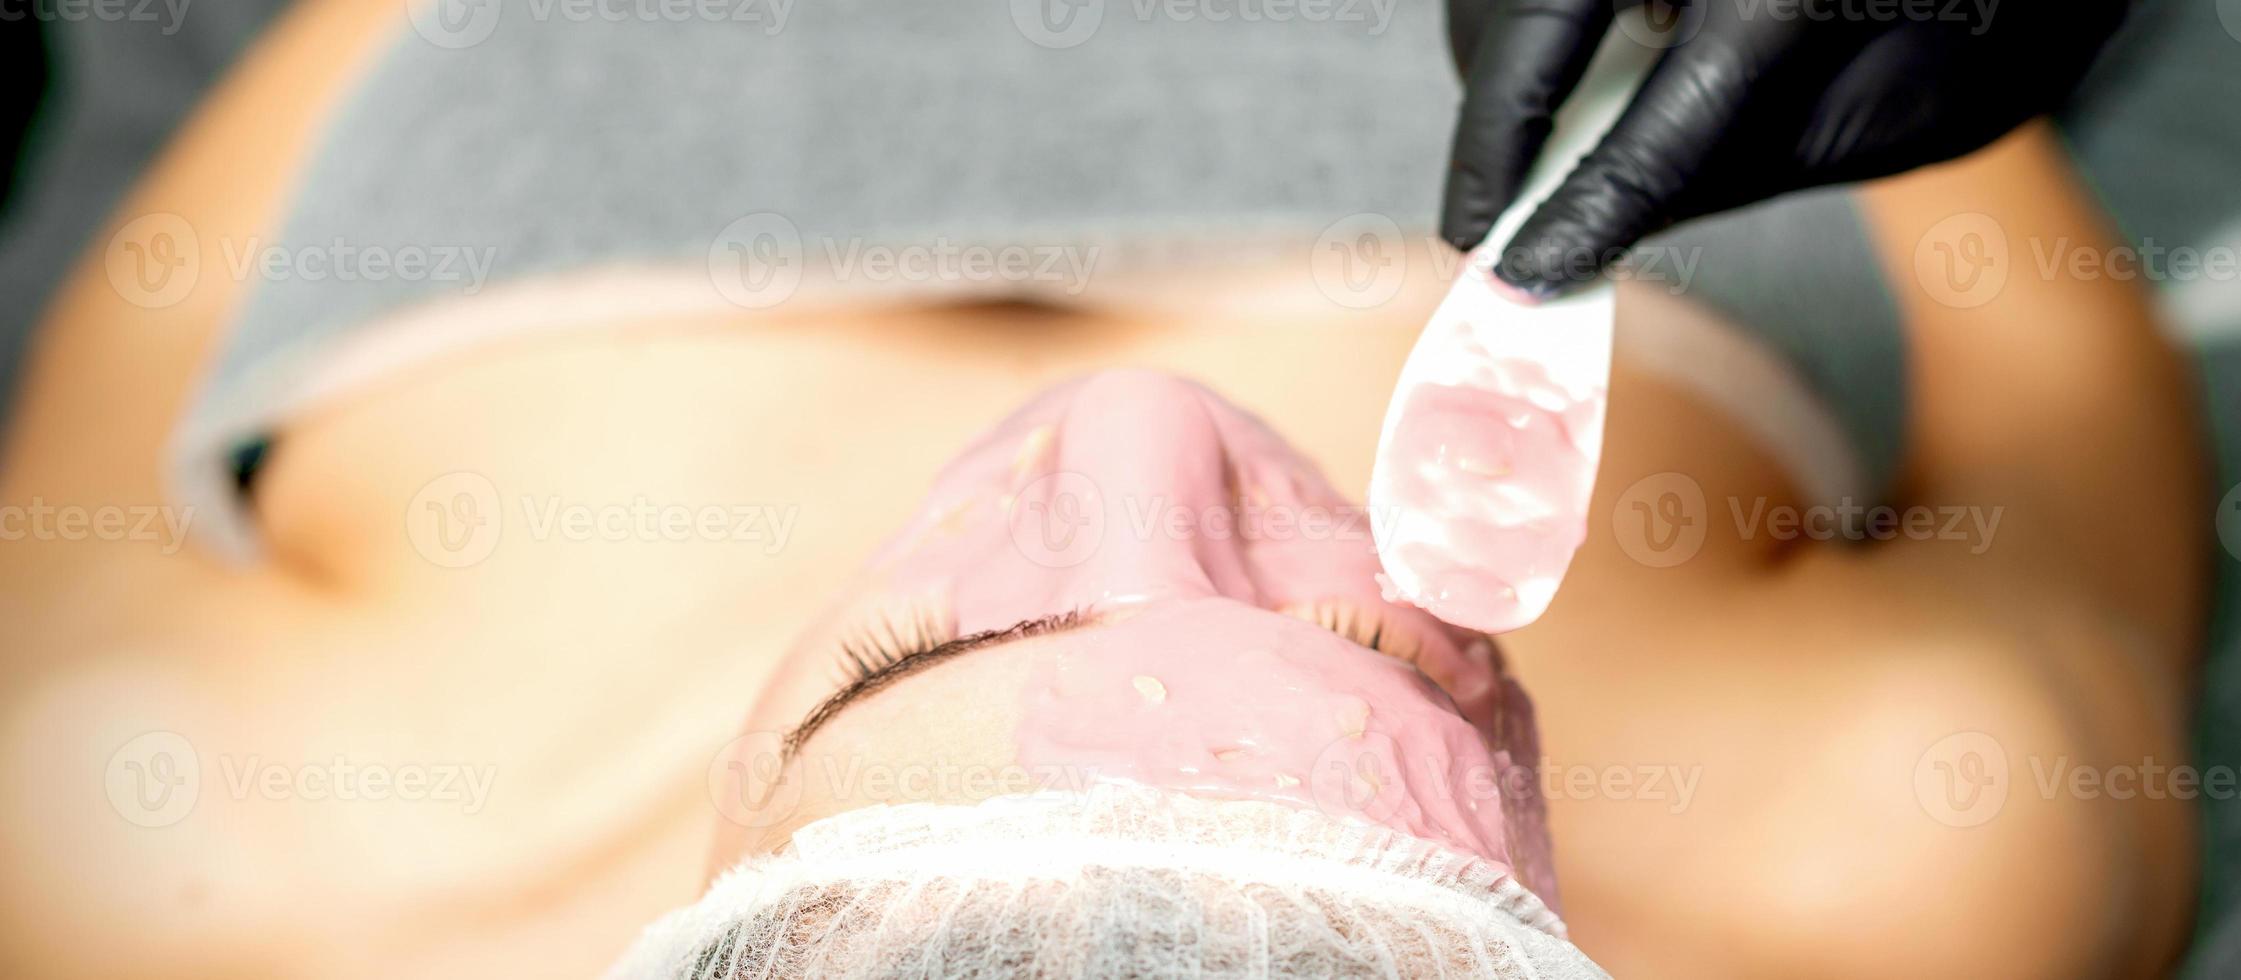 kosmetolog applicering ett alginisk mask foto